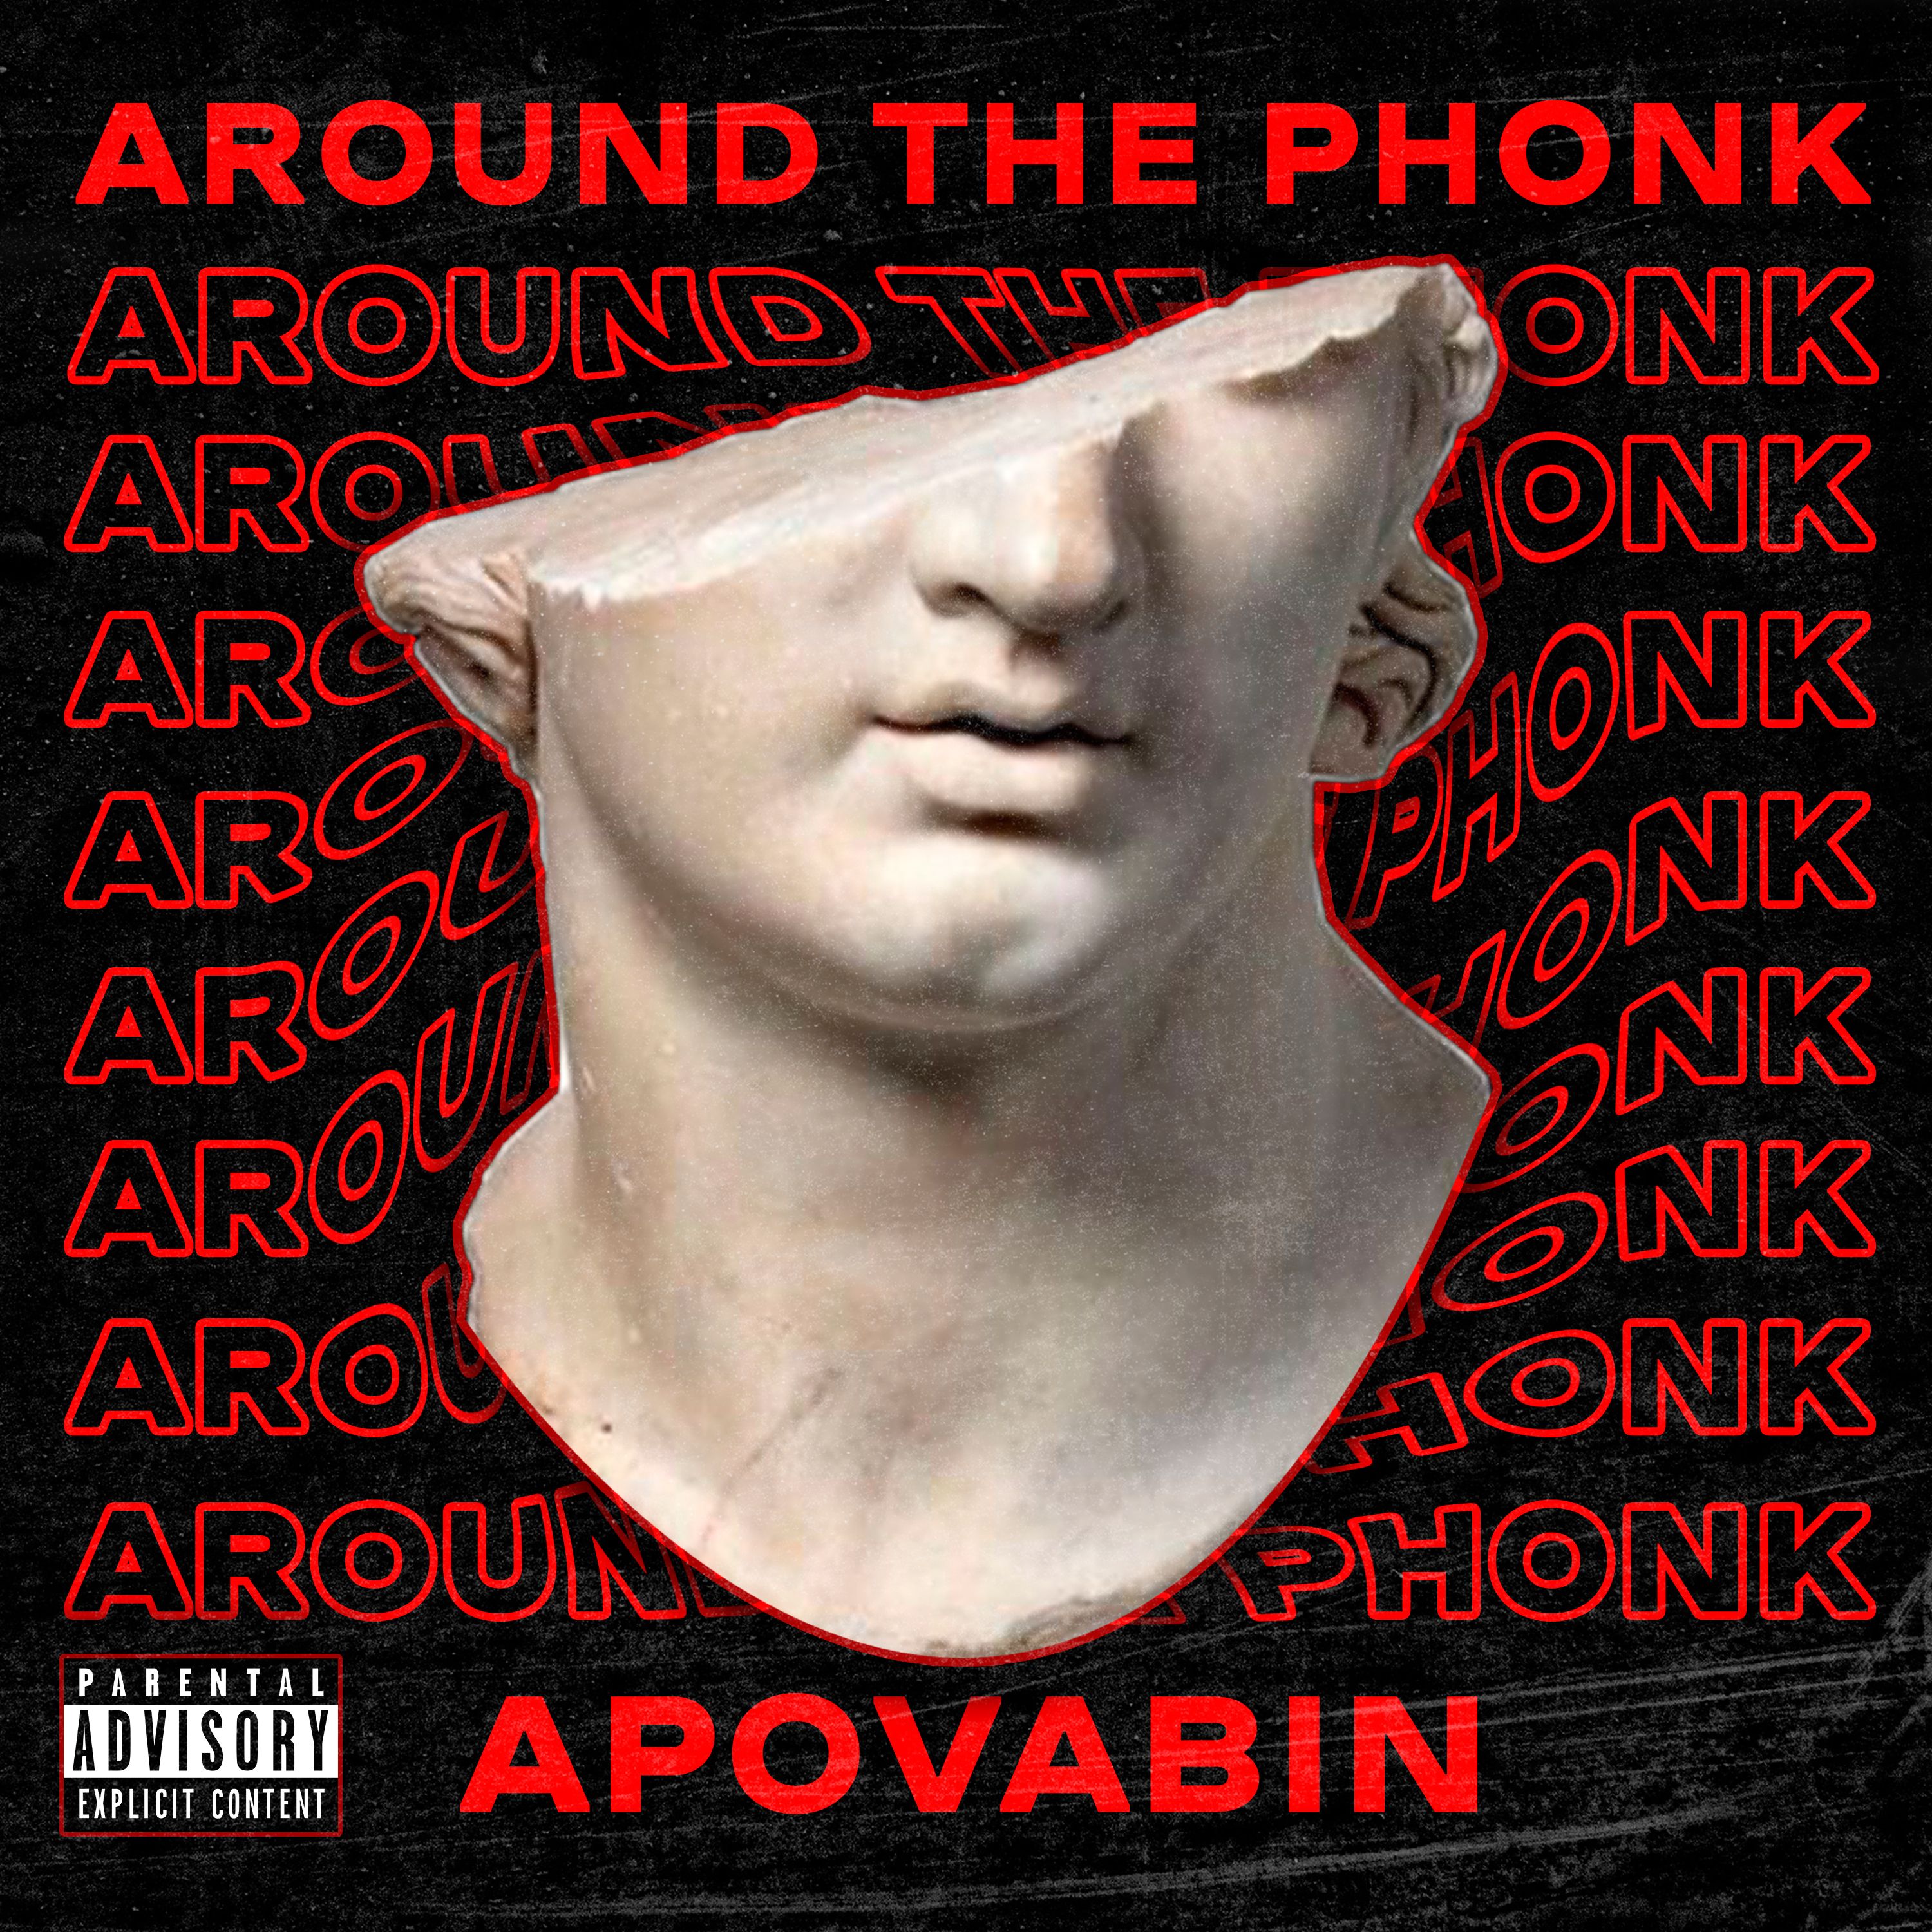 I-download Apovabin - AROUND THE PHONK